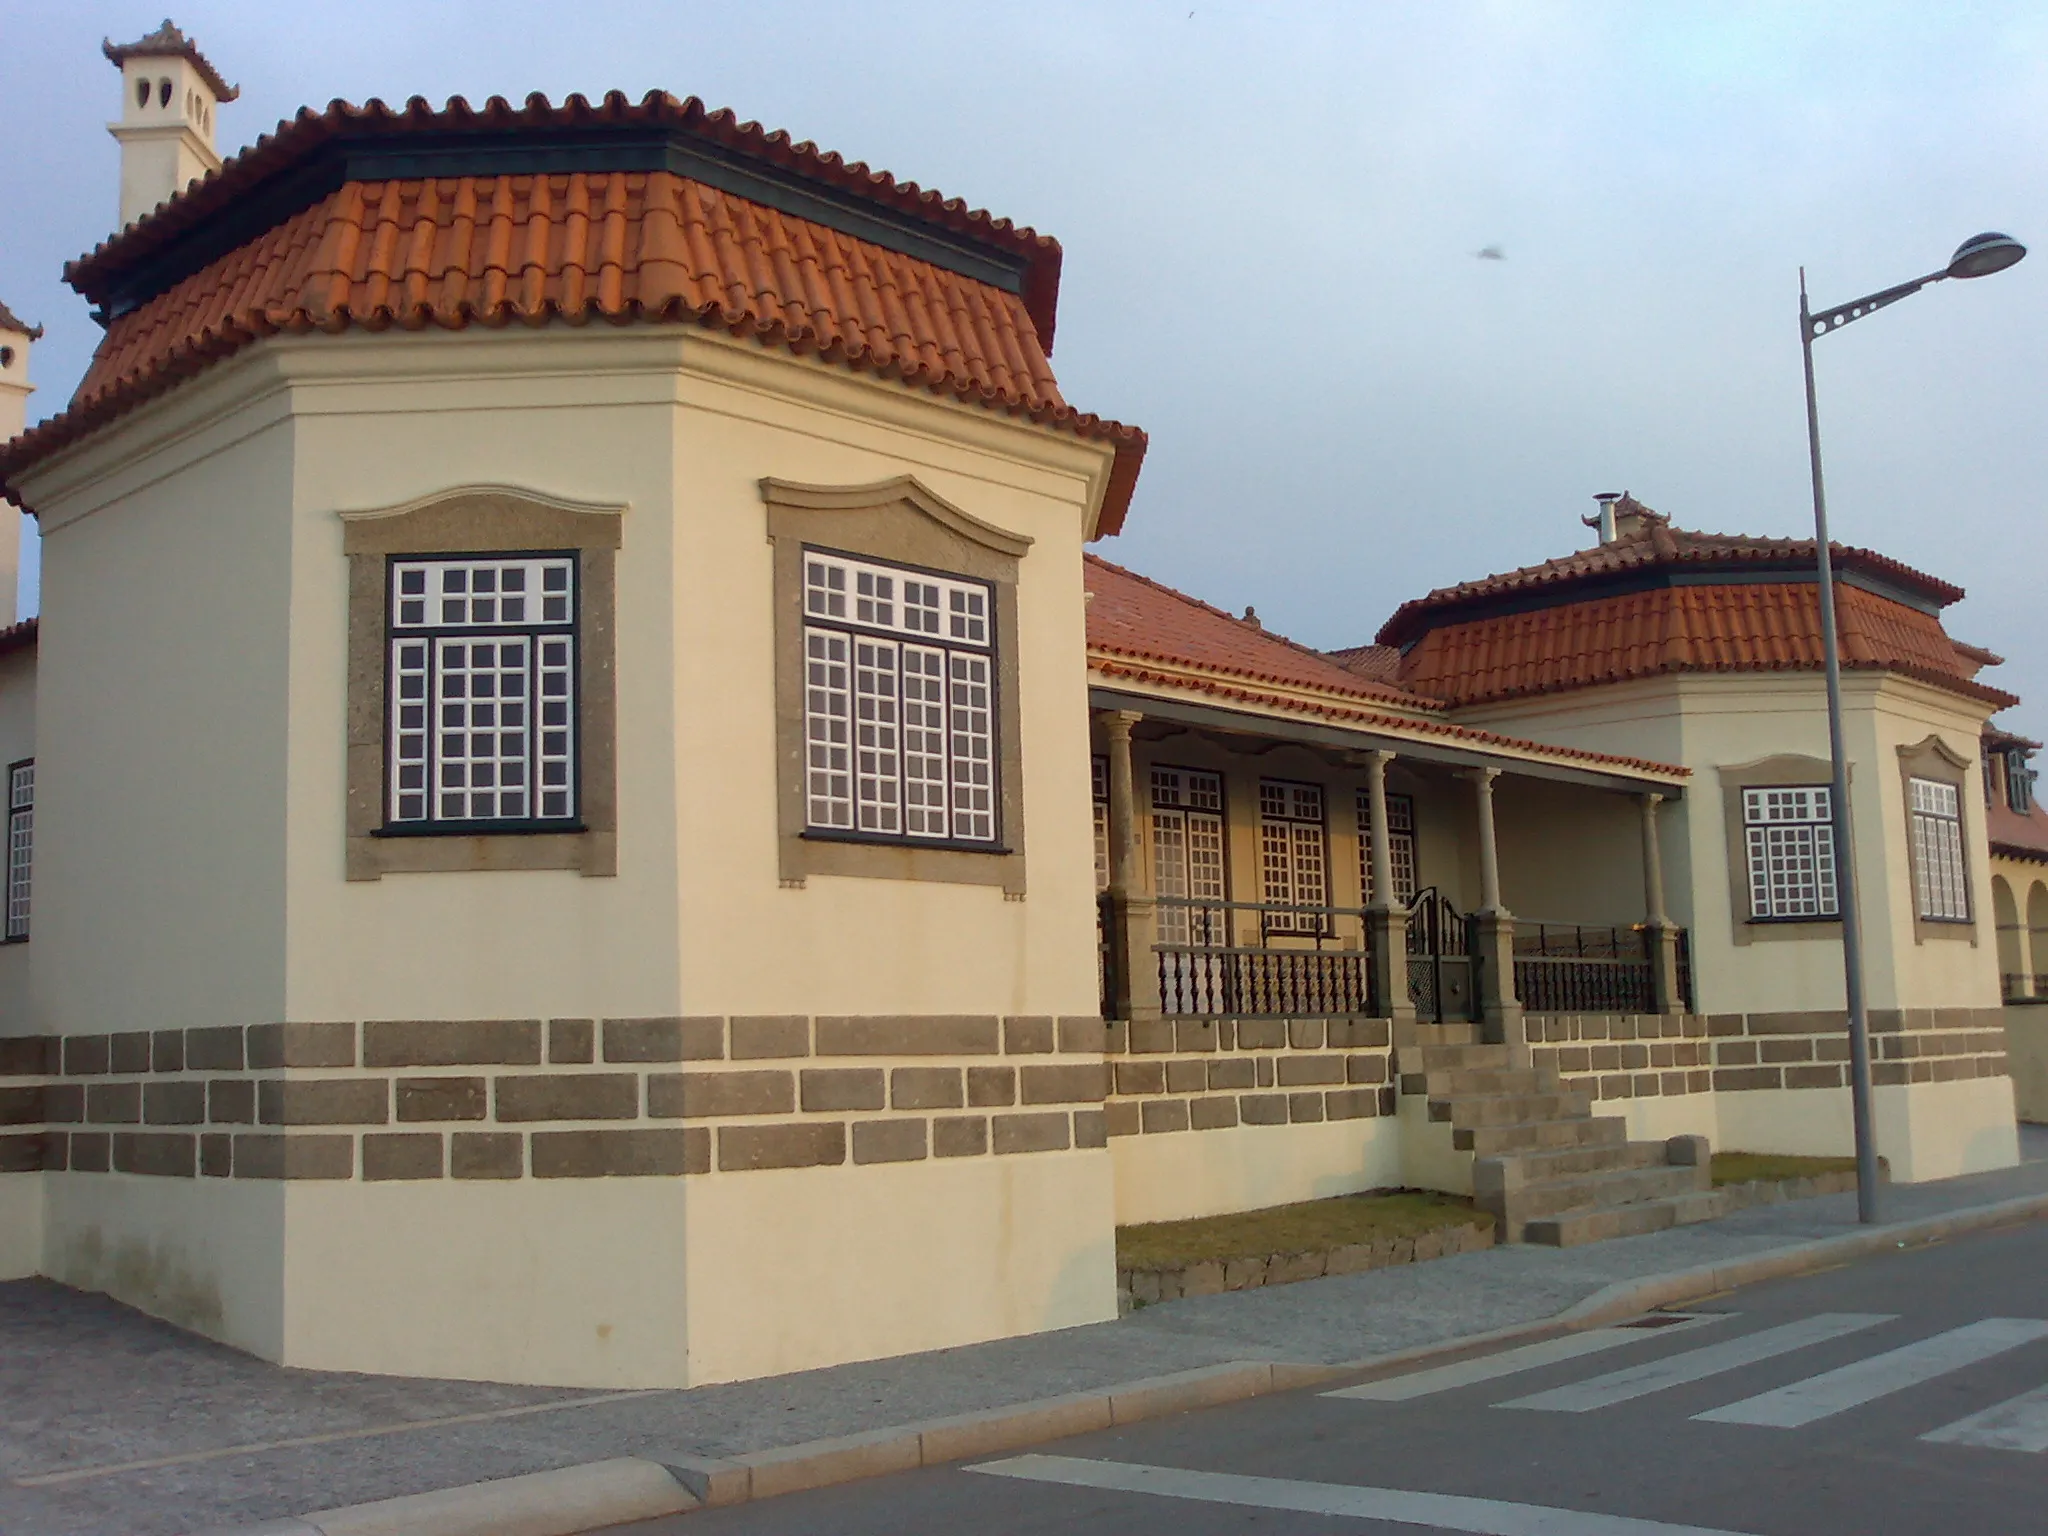 Photo showing: House at Granja beach, Vila Nova de Gaia, Portugal.